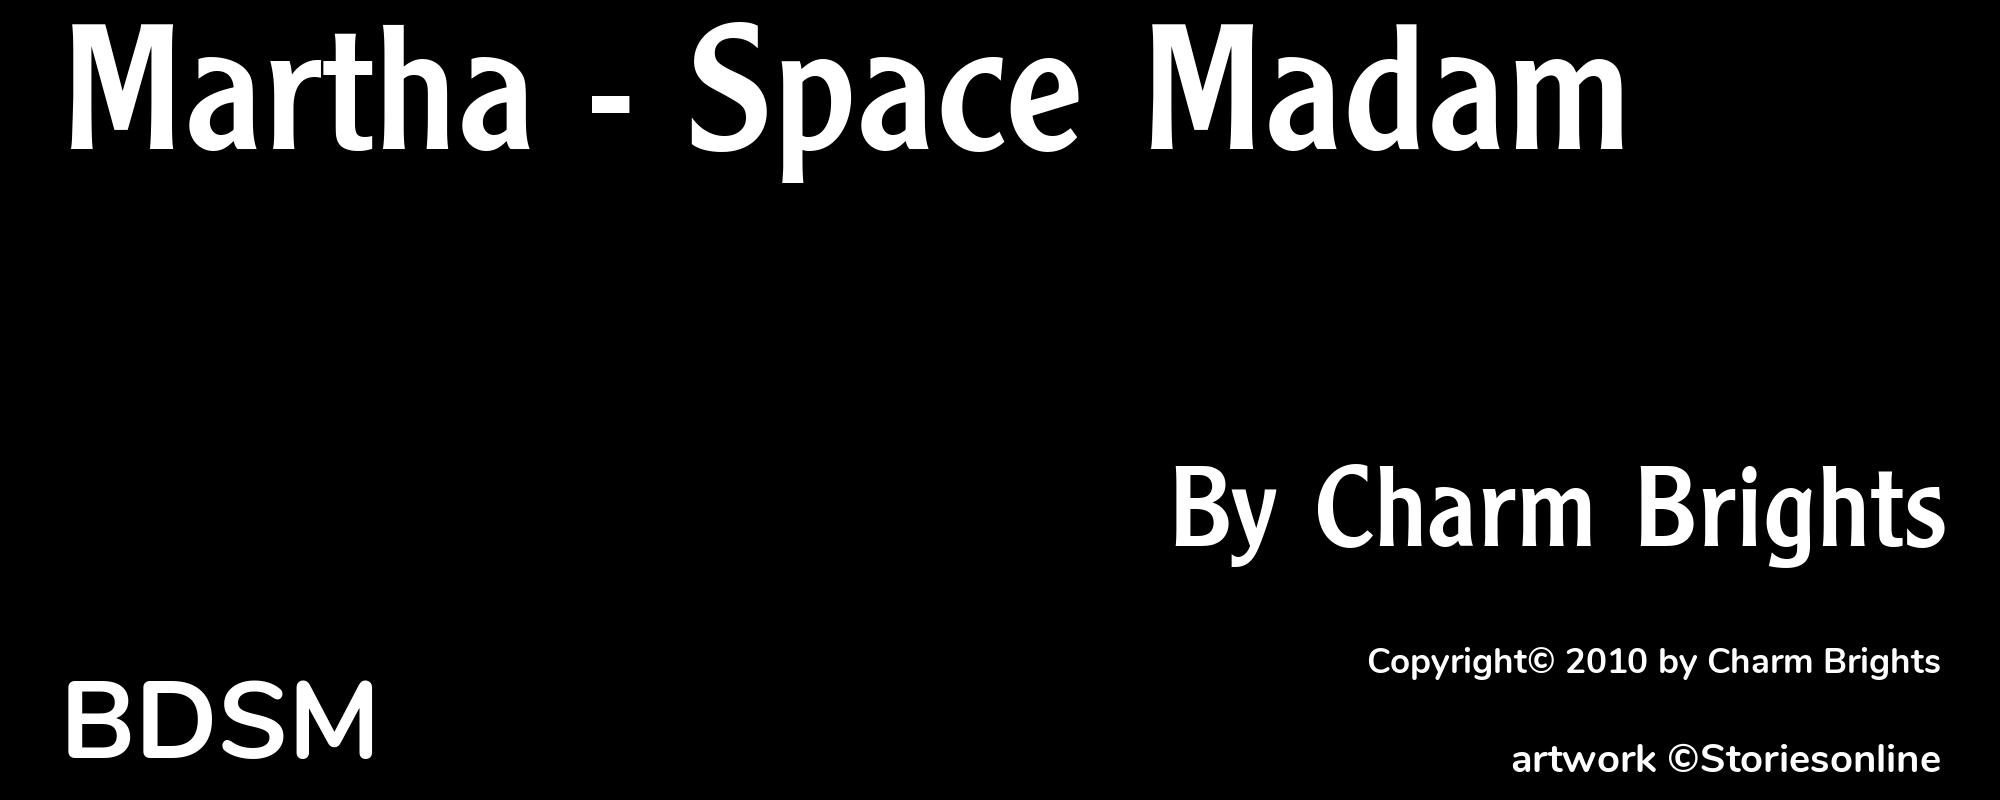 Martha - Space Madam - Cover